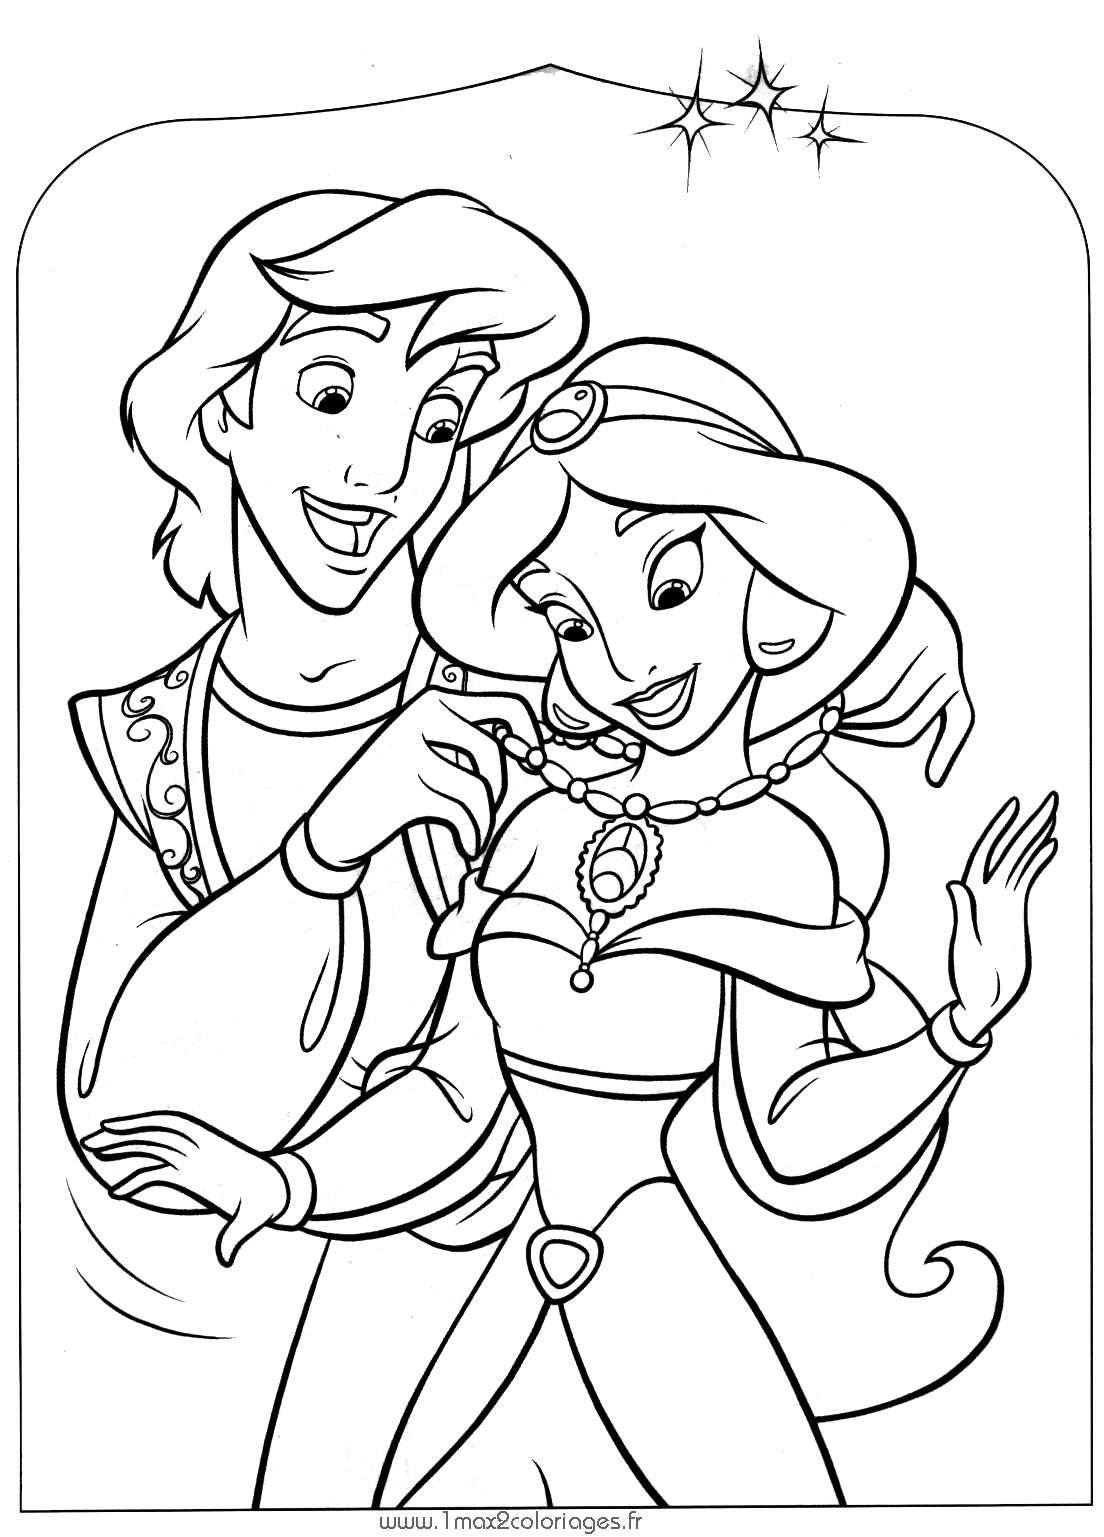 Aladdin and jasmine free to color for kids - Aladdin (and ...